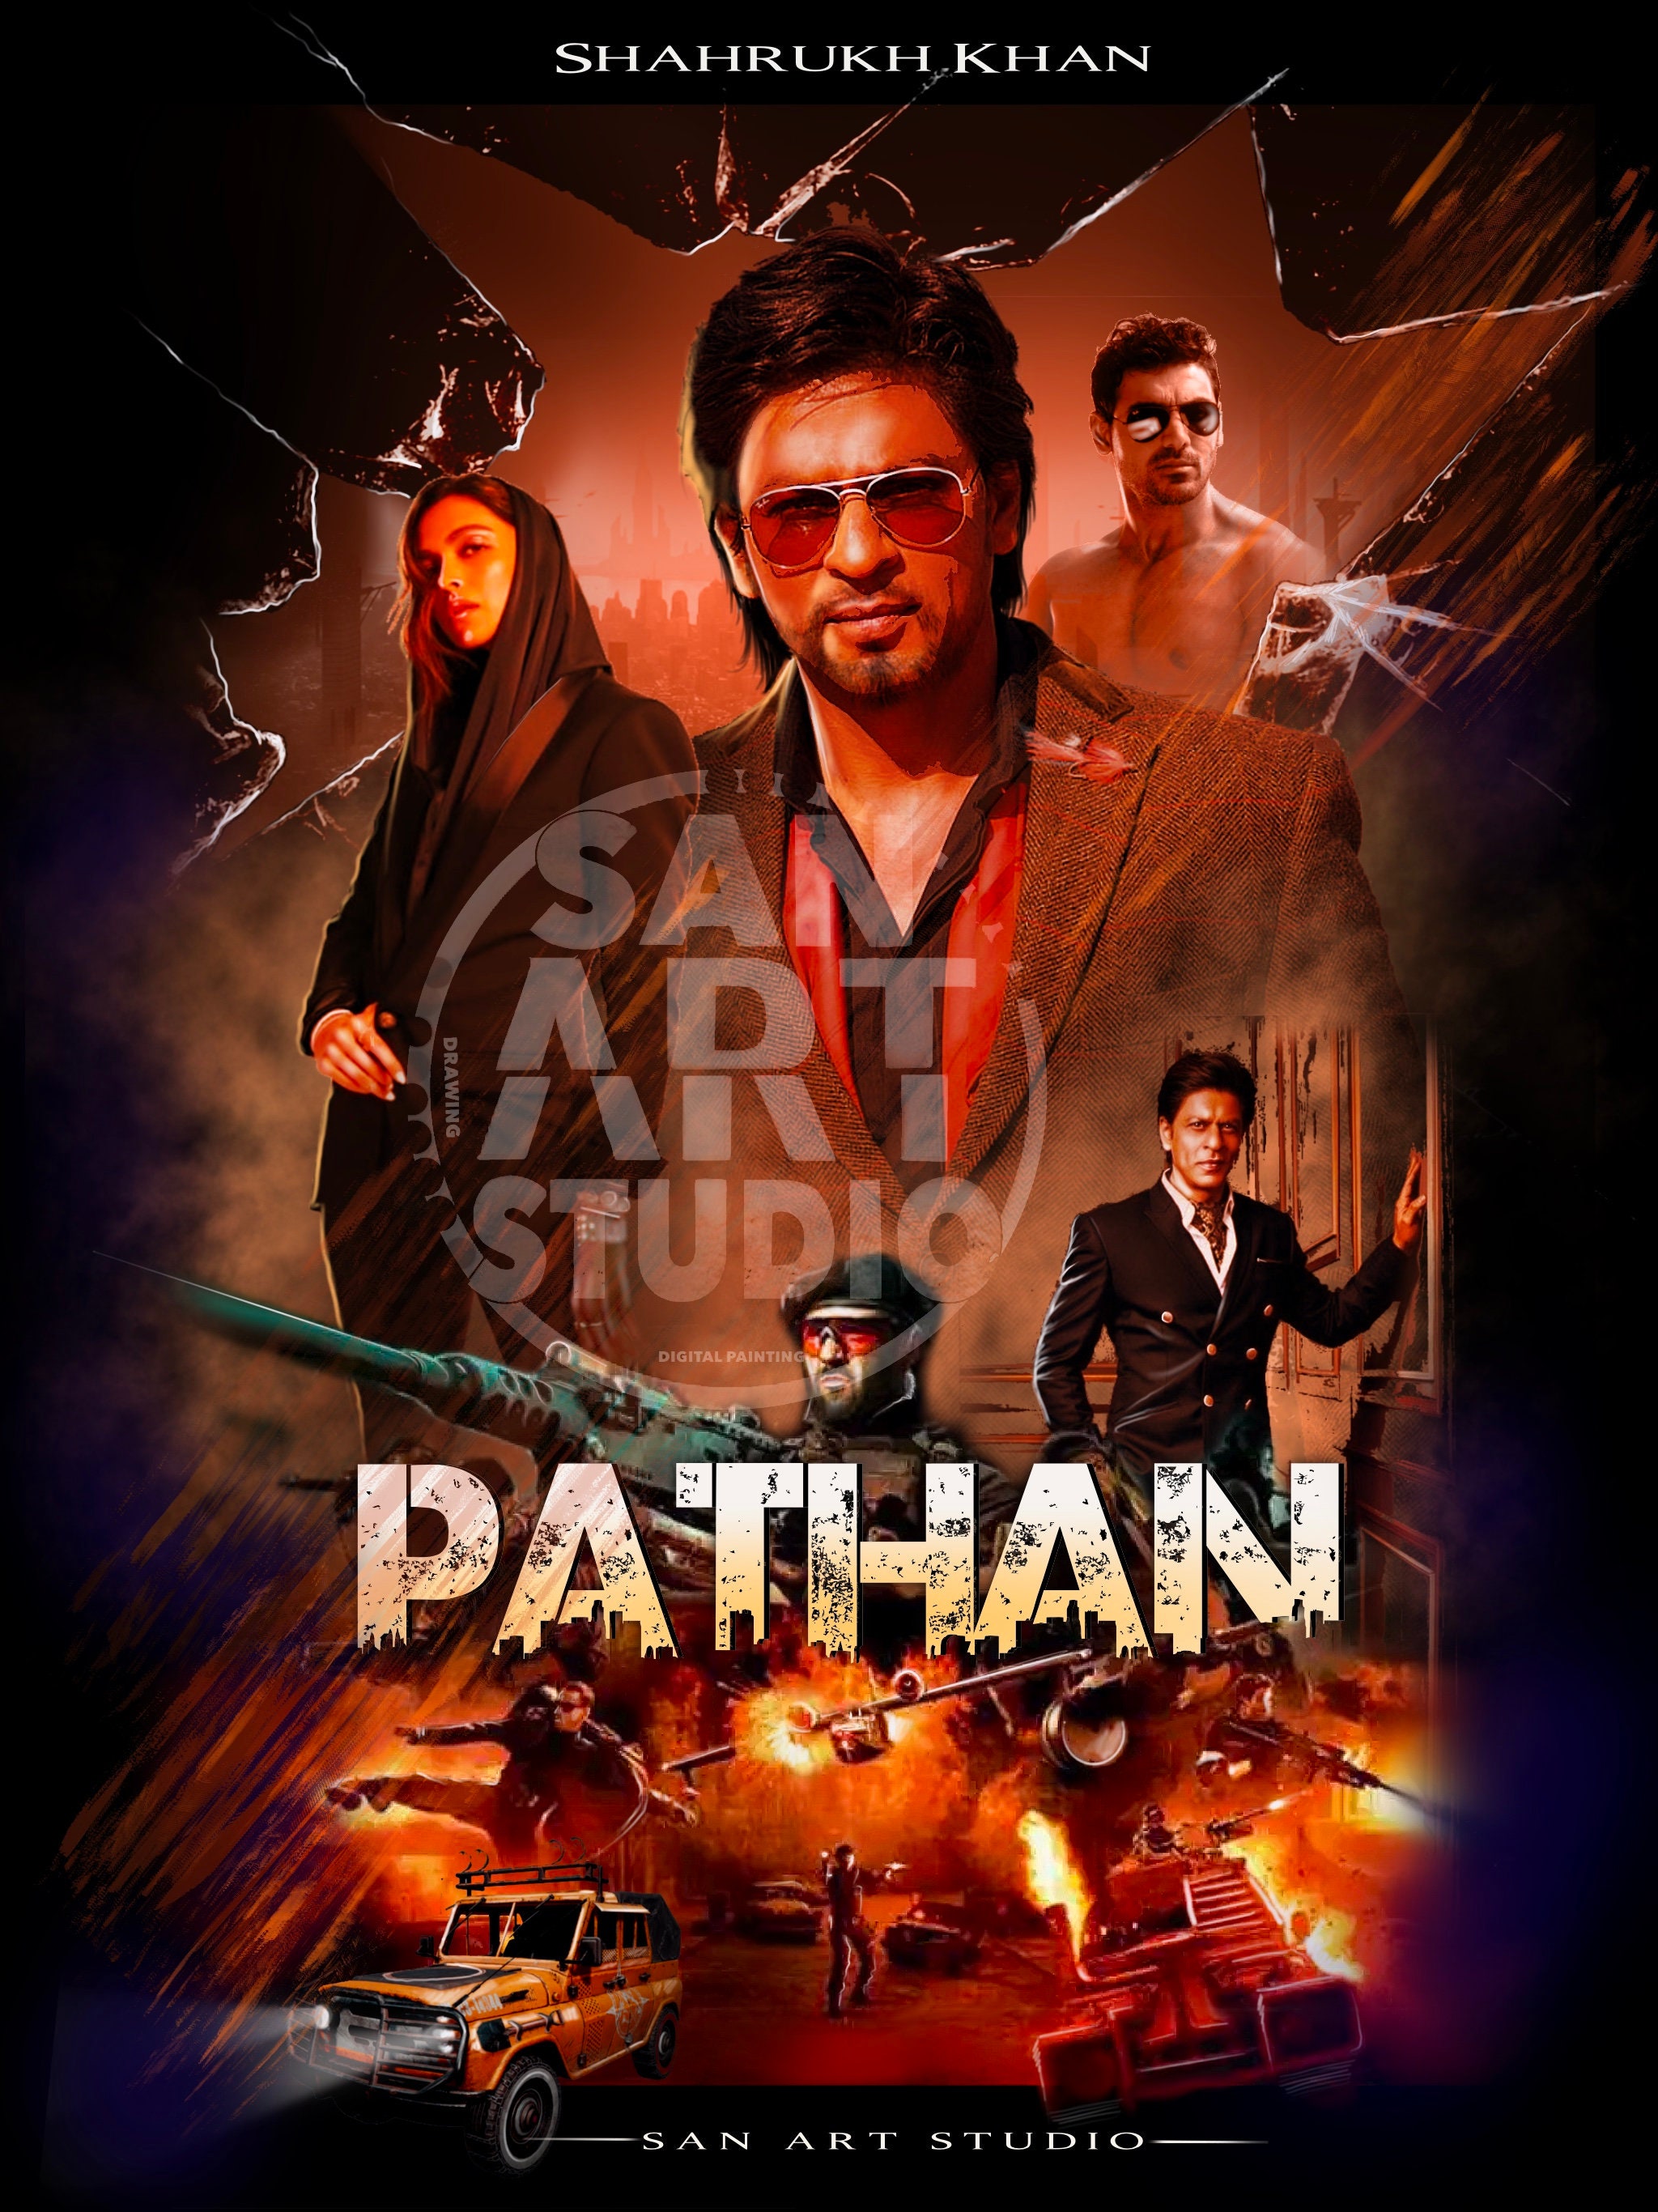 HD photos of Shahrukh Khan at KIFF : r/BollyBlindsNGossip